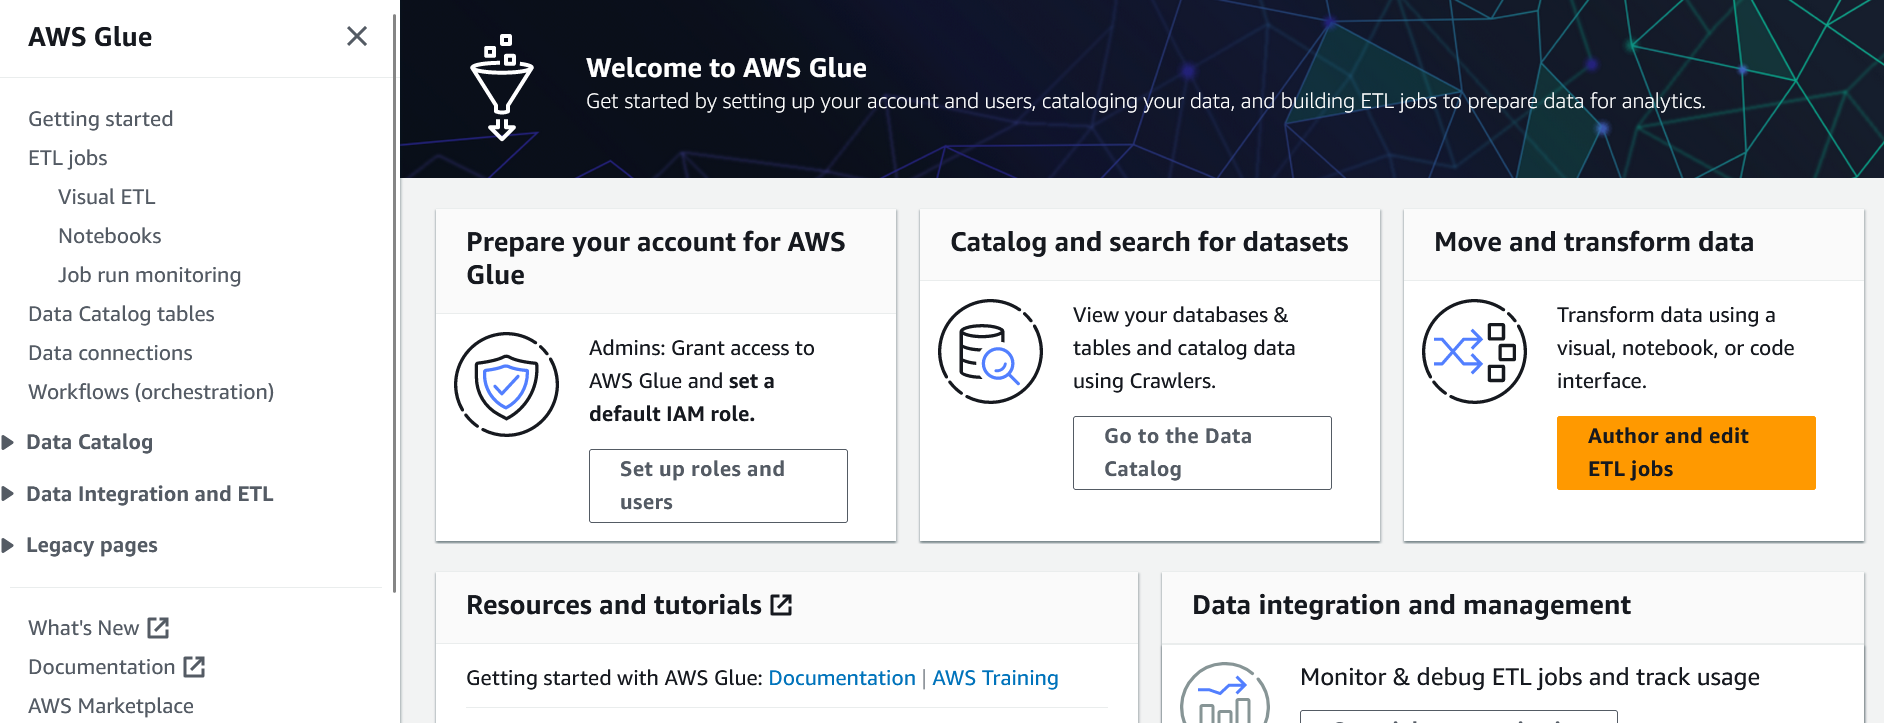 AWS Glue Main Page